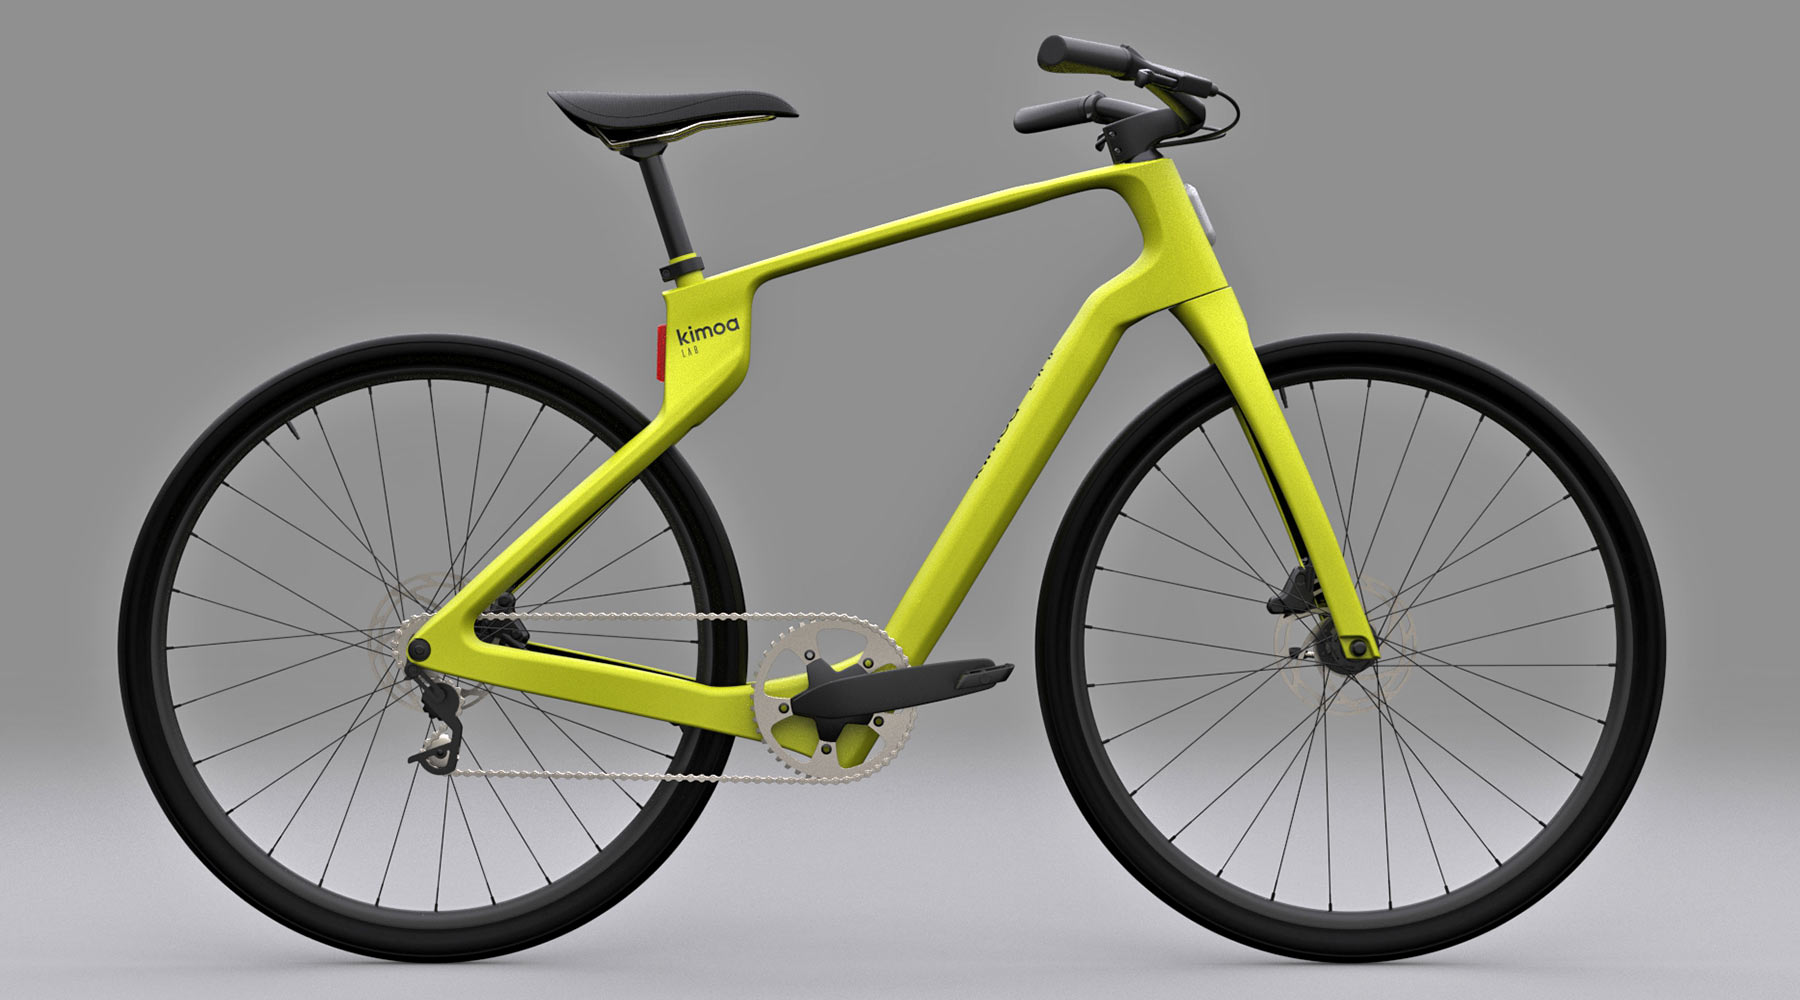 Kimoa x Arevo custom 3d-printed carbon e-bike, yellow complete